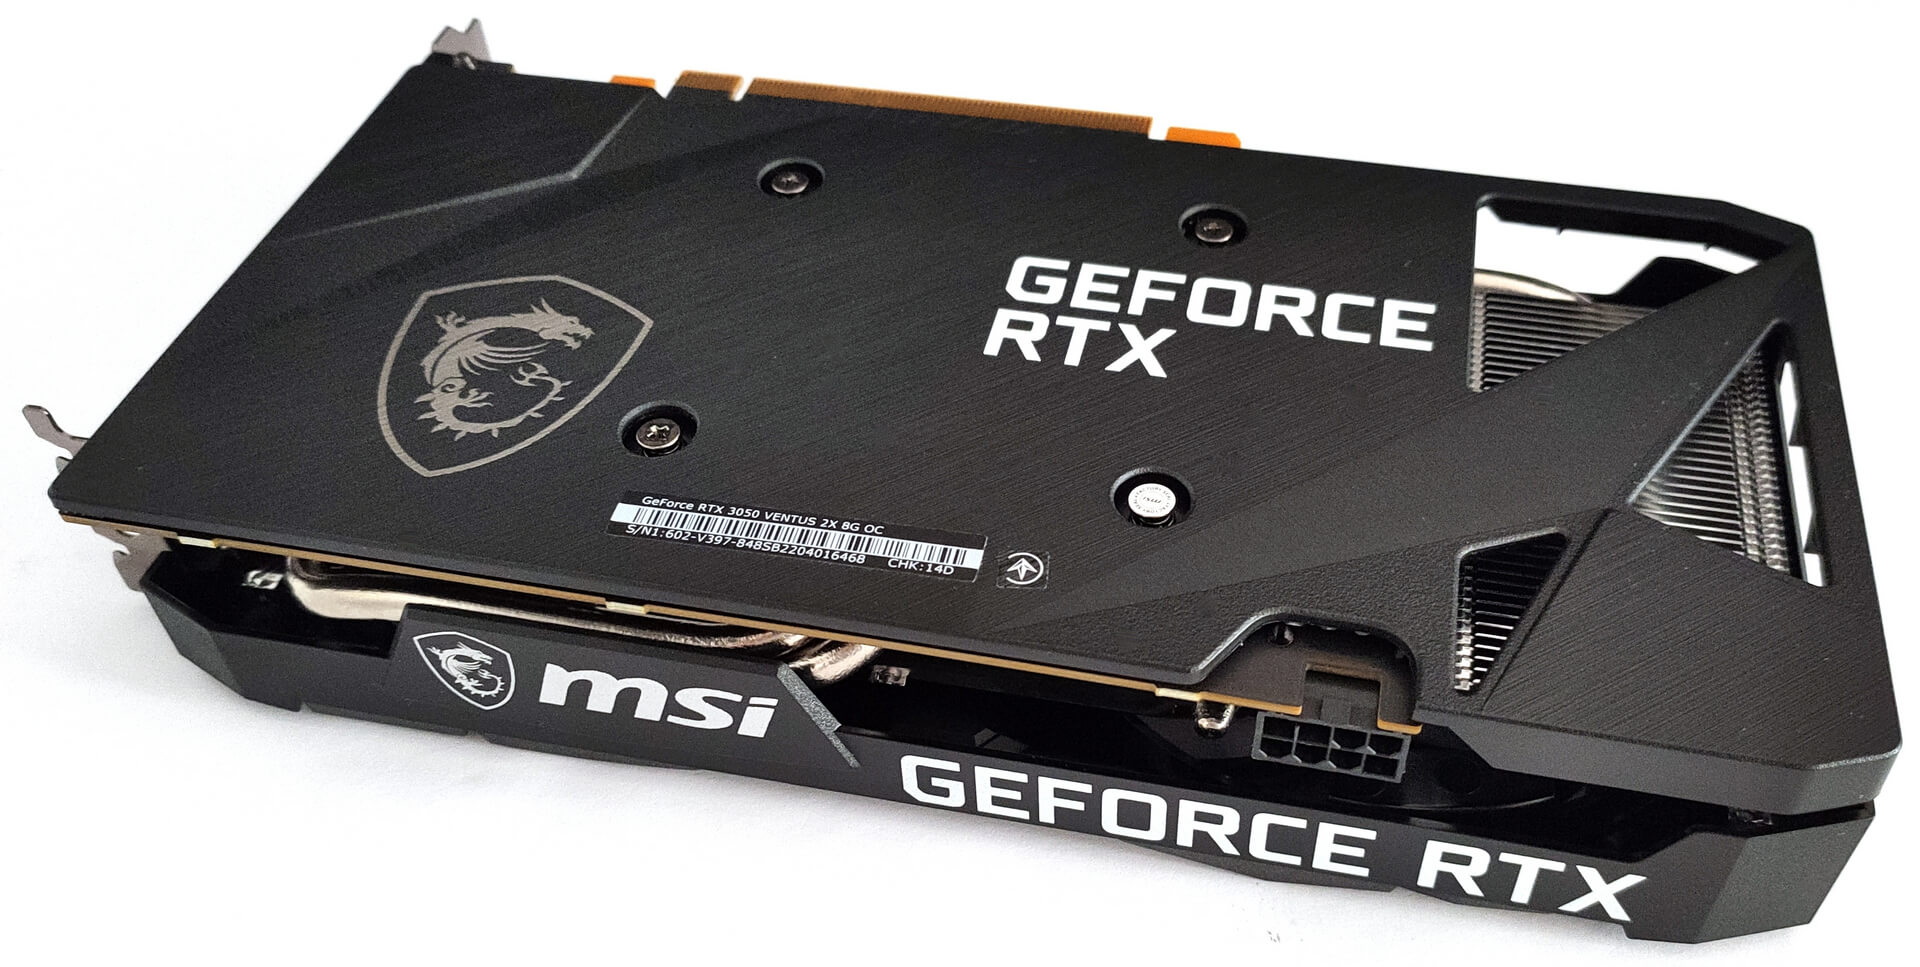 MSI GeForce RTX 3050 VENTUS 2X 8G OC